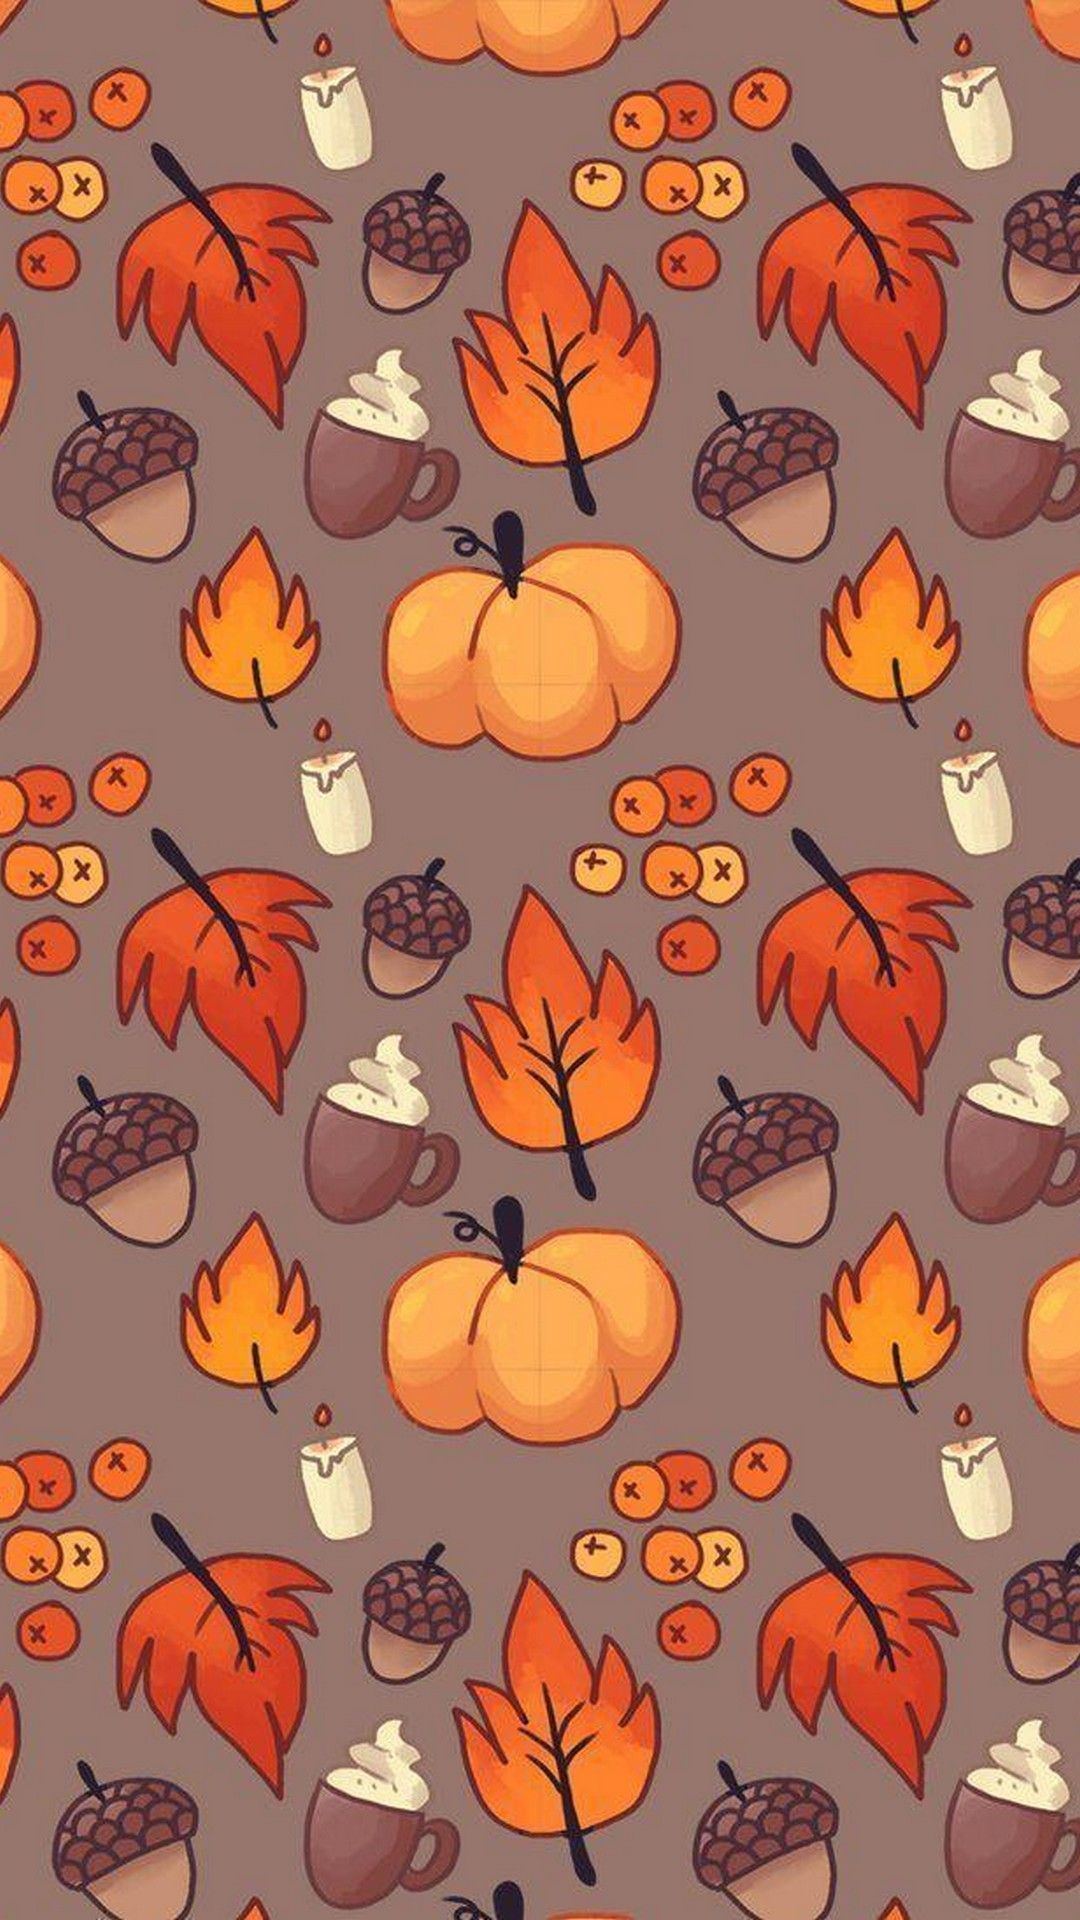 A pattern of pumpkins, leaves and acorns - Halloween, cute Halloween, spooky